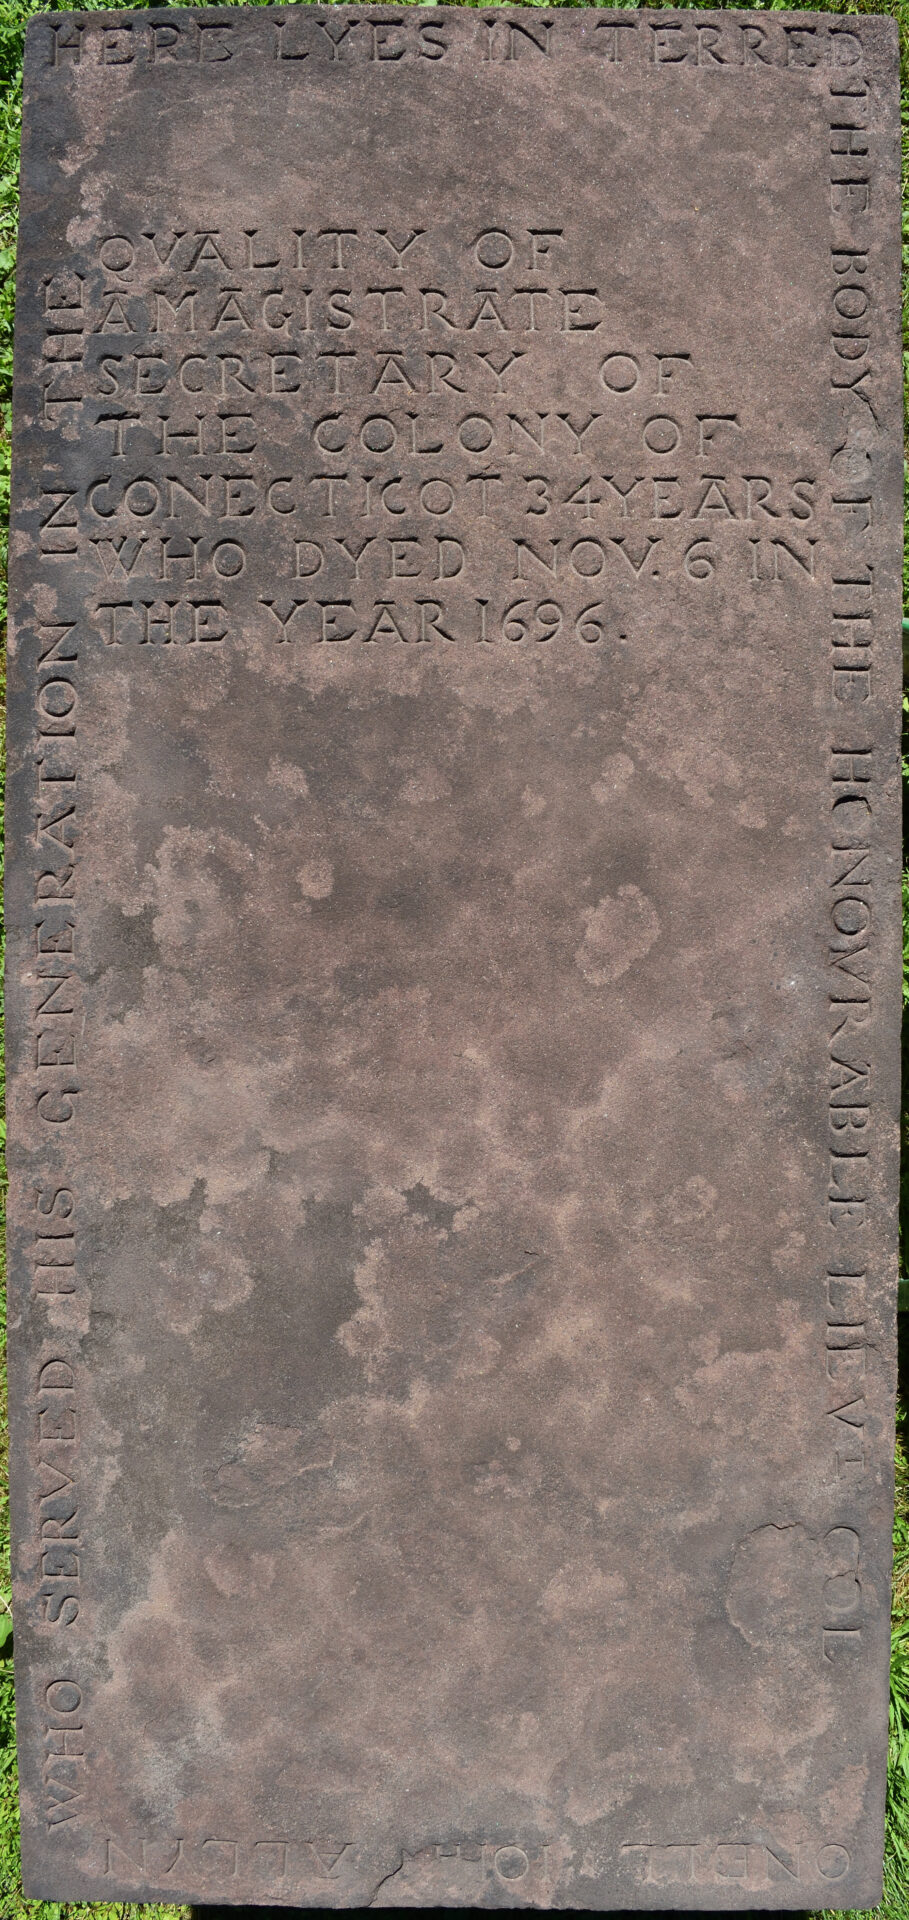 Photo of Inscription on tablestone for Lieutenant Colonel John Allyn, 1696